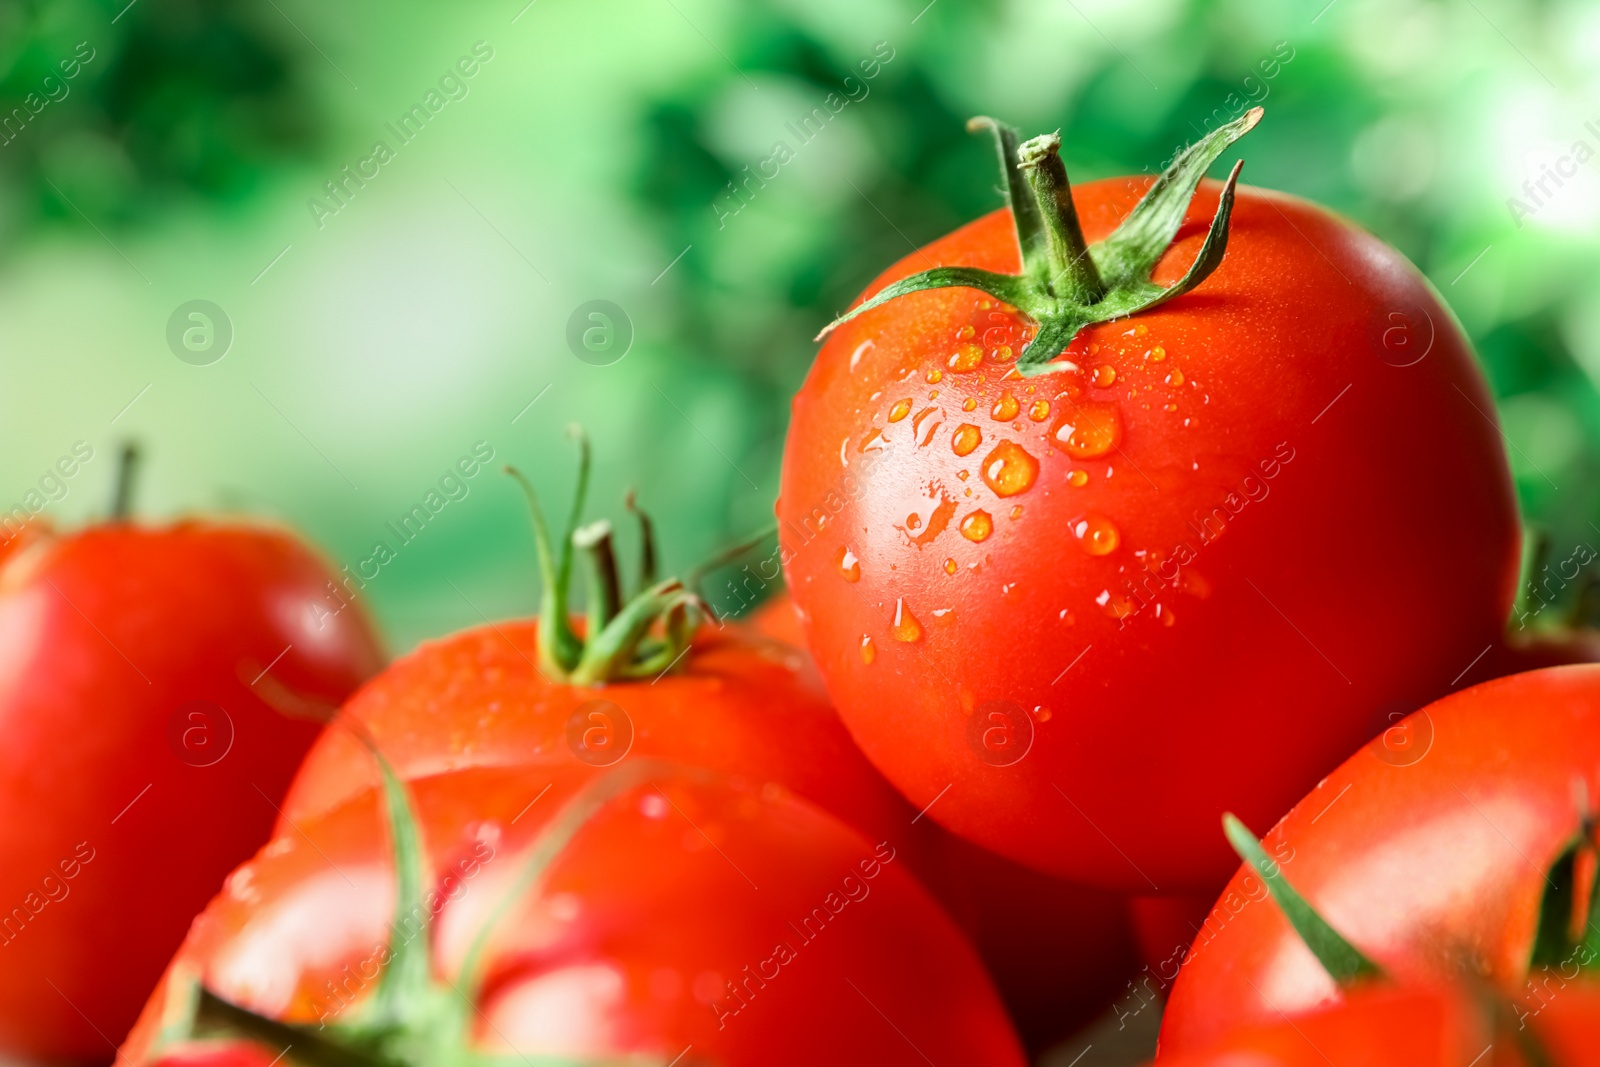 Photo of Pile of fresh ripe tomatoes, closeup view